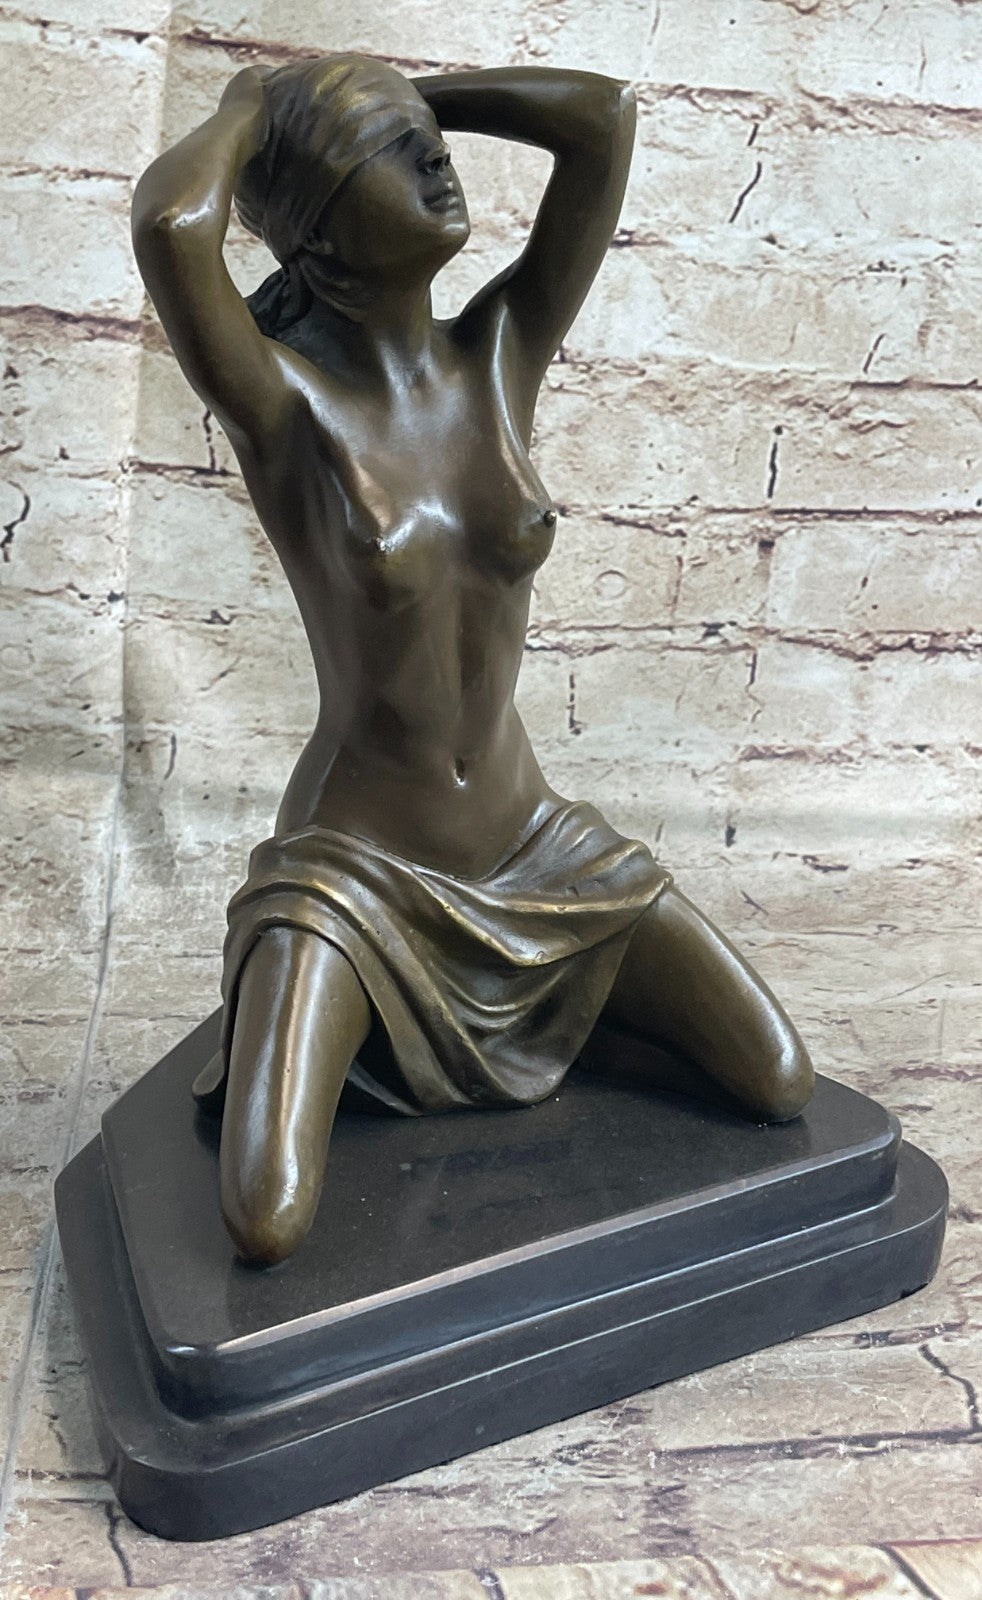 Abstract Modern Art Nude Girl Captive Bronze Sculpture Marble Base Statue Figure